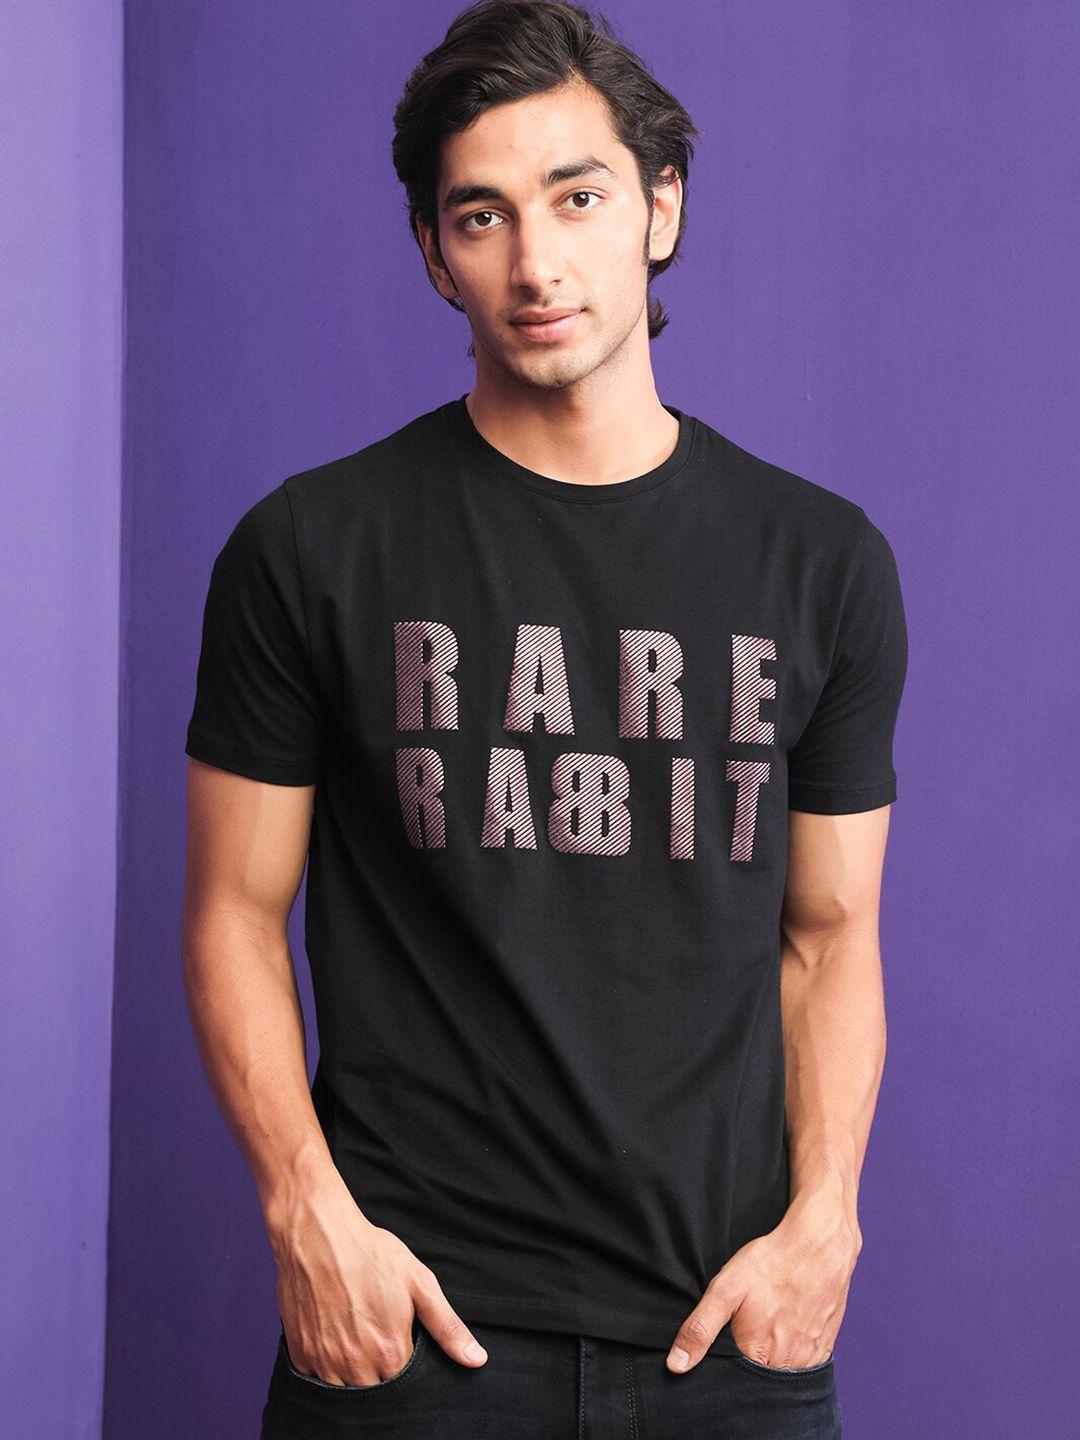 rare rabbit typography printed cotton slim fit t-shirt